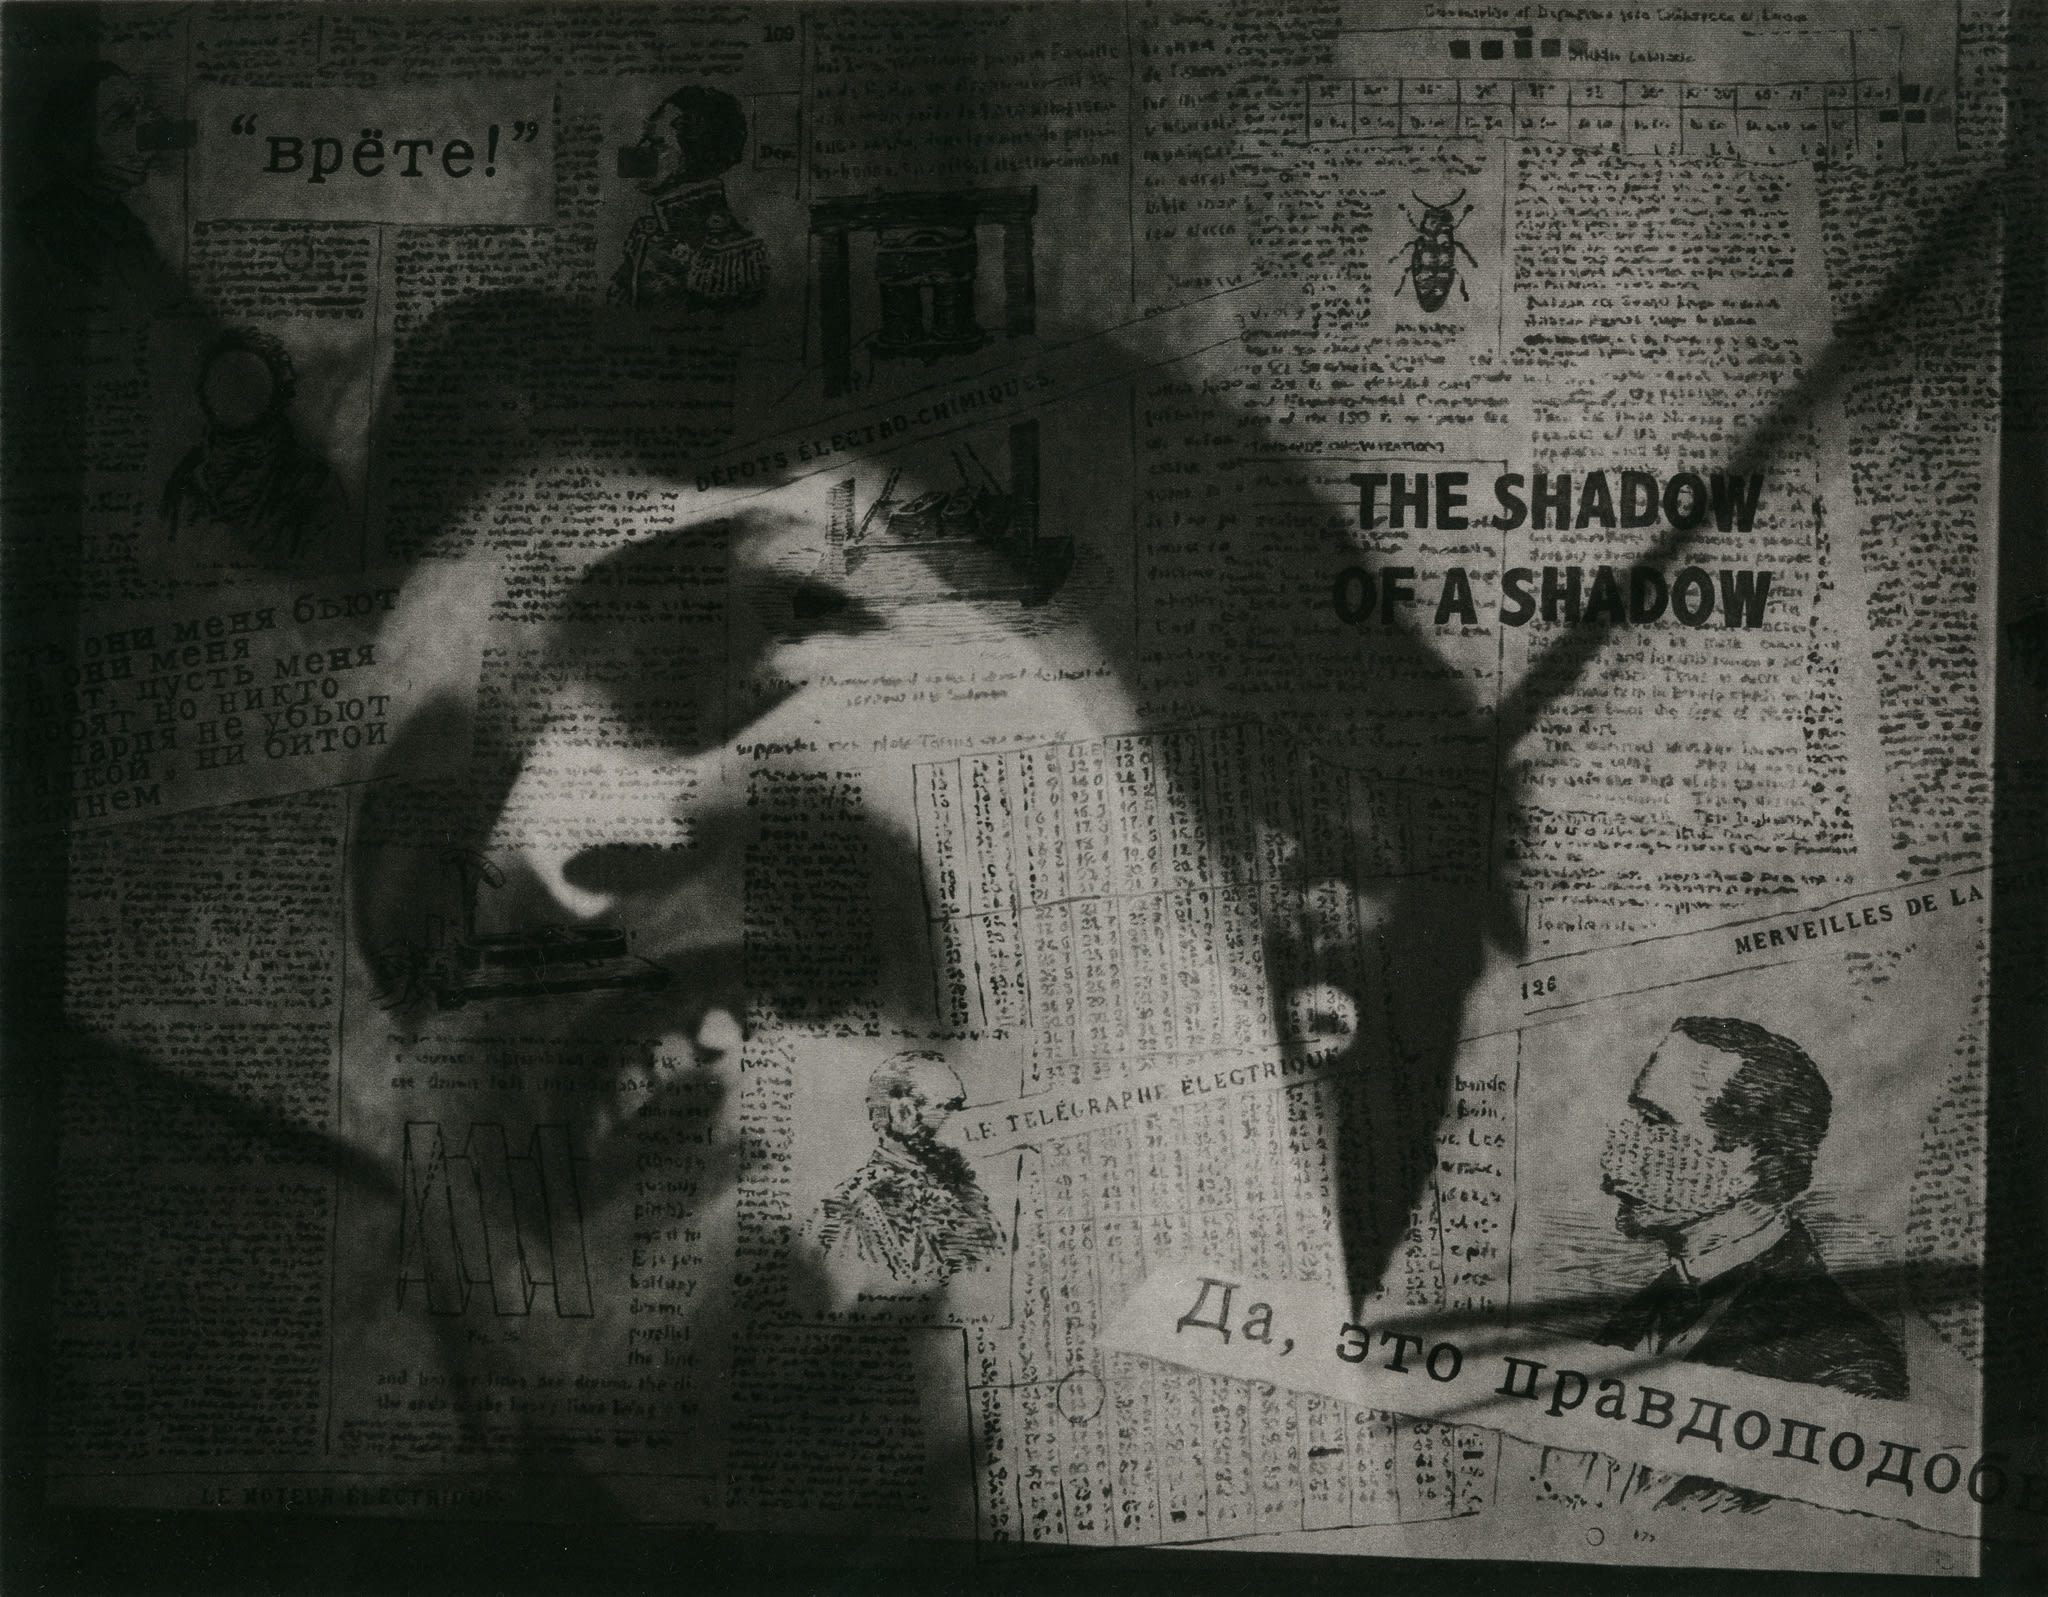 William Kentridge, The Shadow of a Shadow, 2010